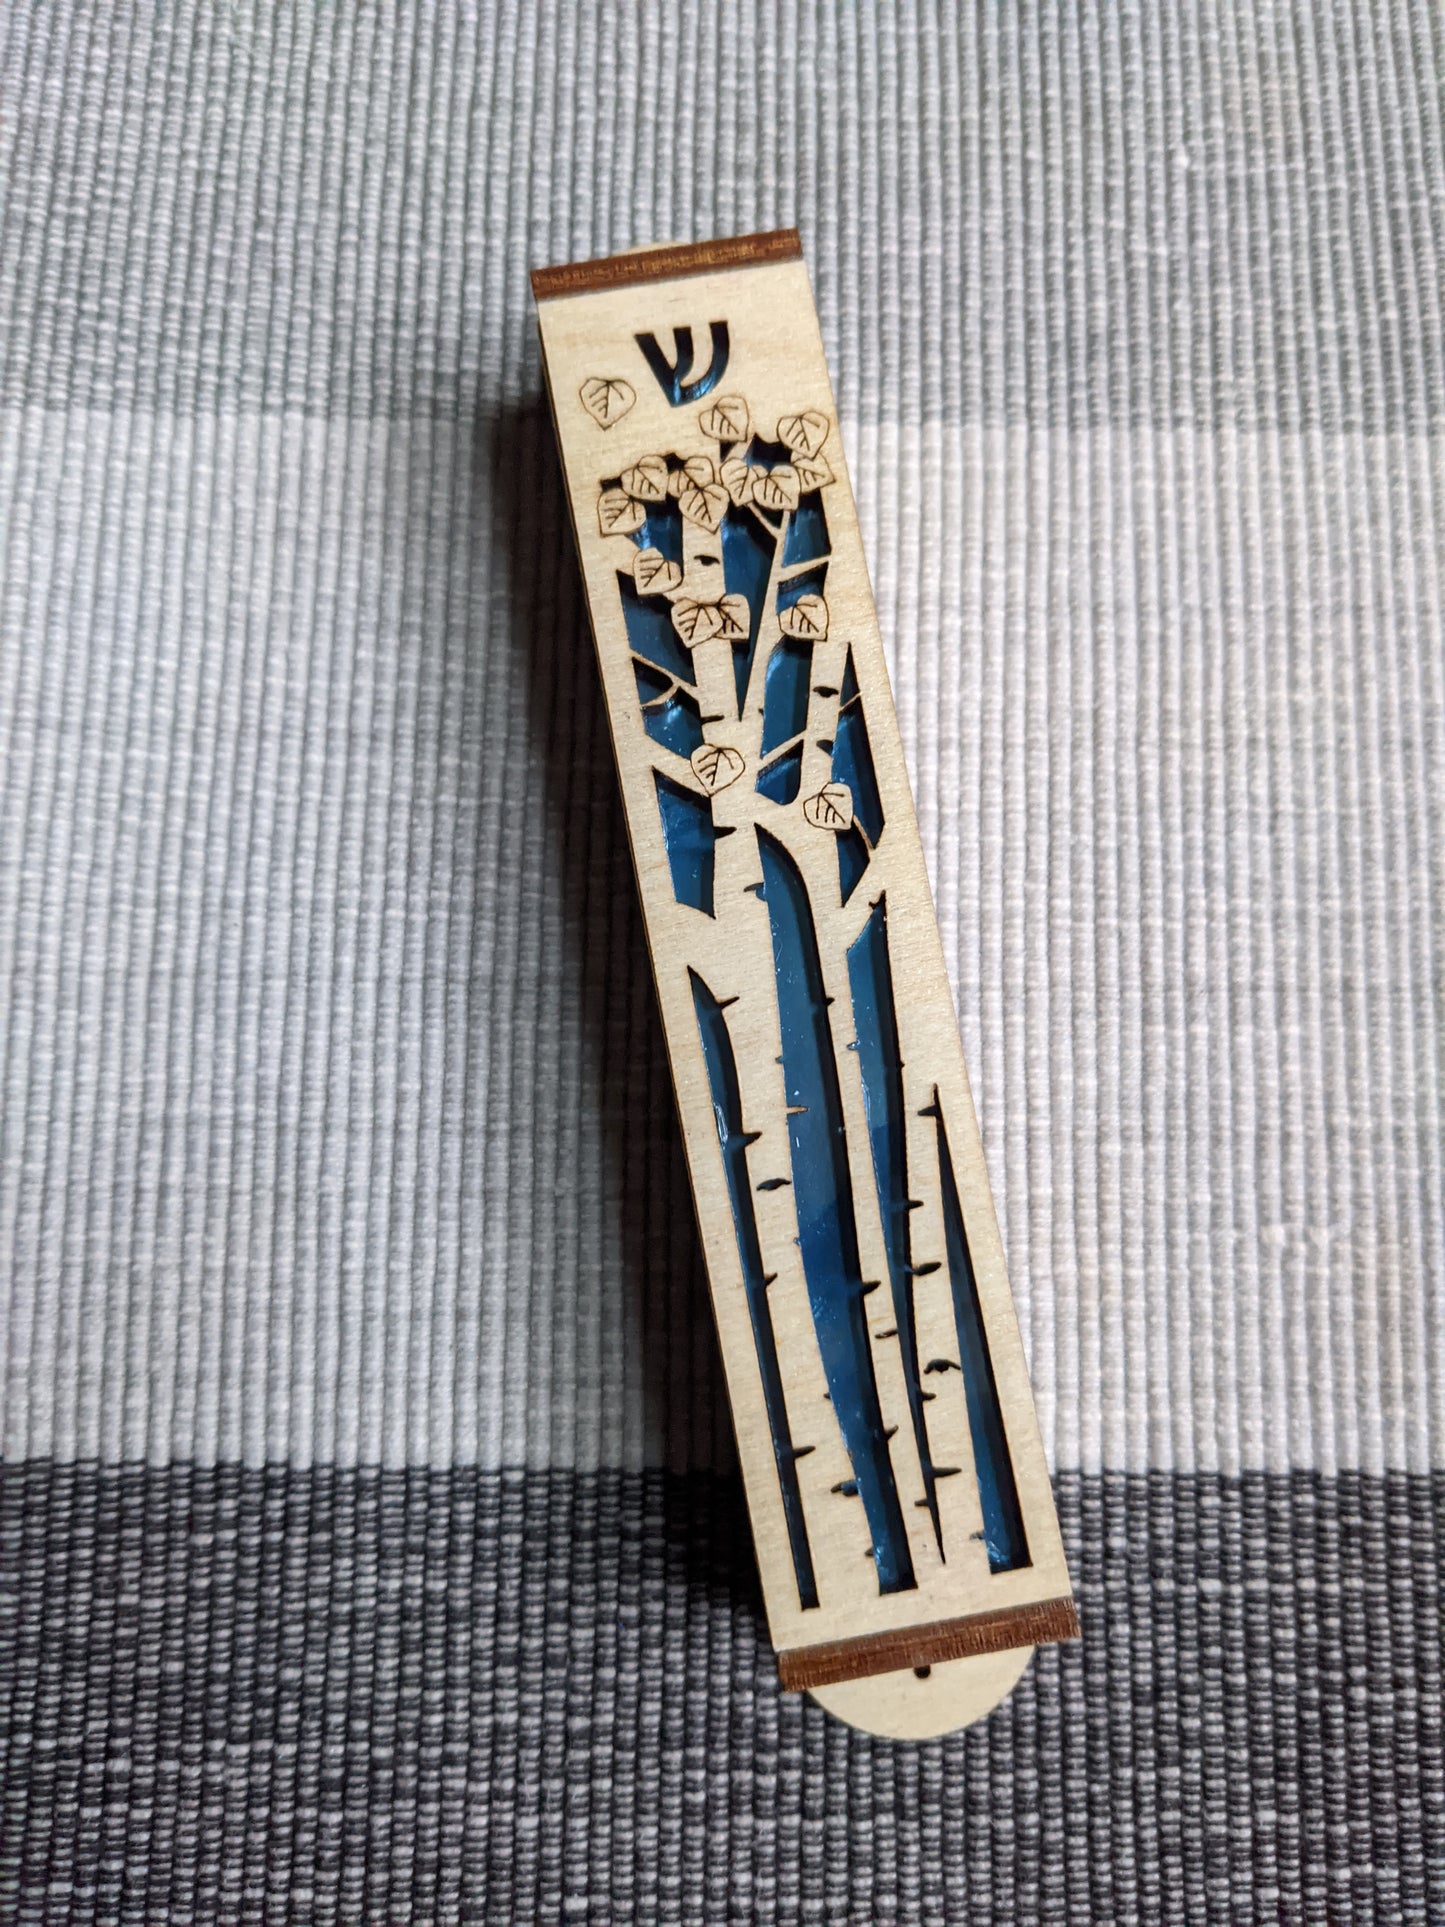 Aspen Tree Laser Cut Wood Mezuzah - 1 inch // Bat/Bar Mitzvah Gift // Wedding Present